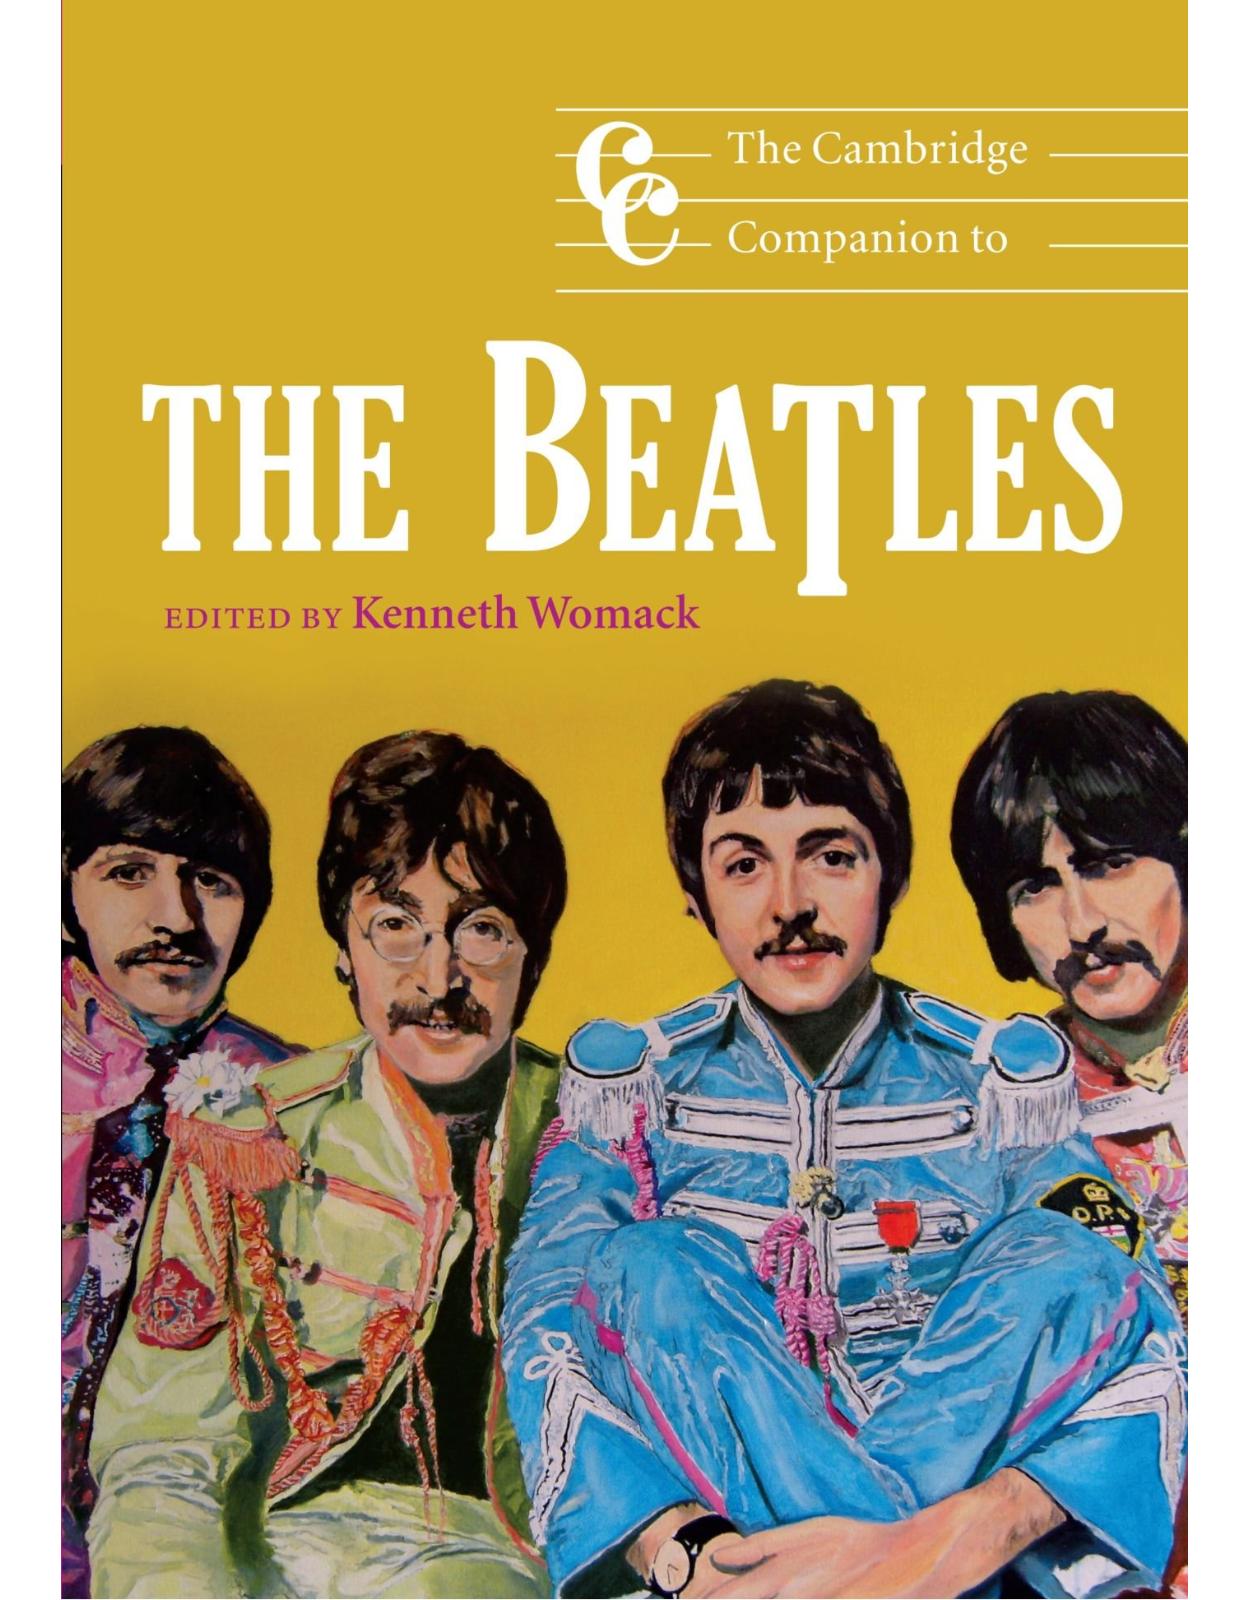 The Cambridge Companion to the Beatles (Cambridge Companions to Music)